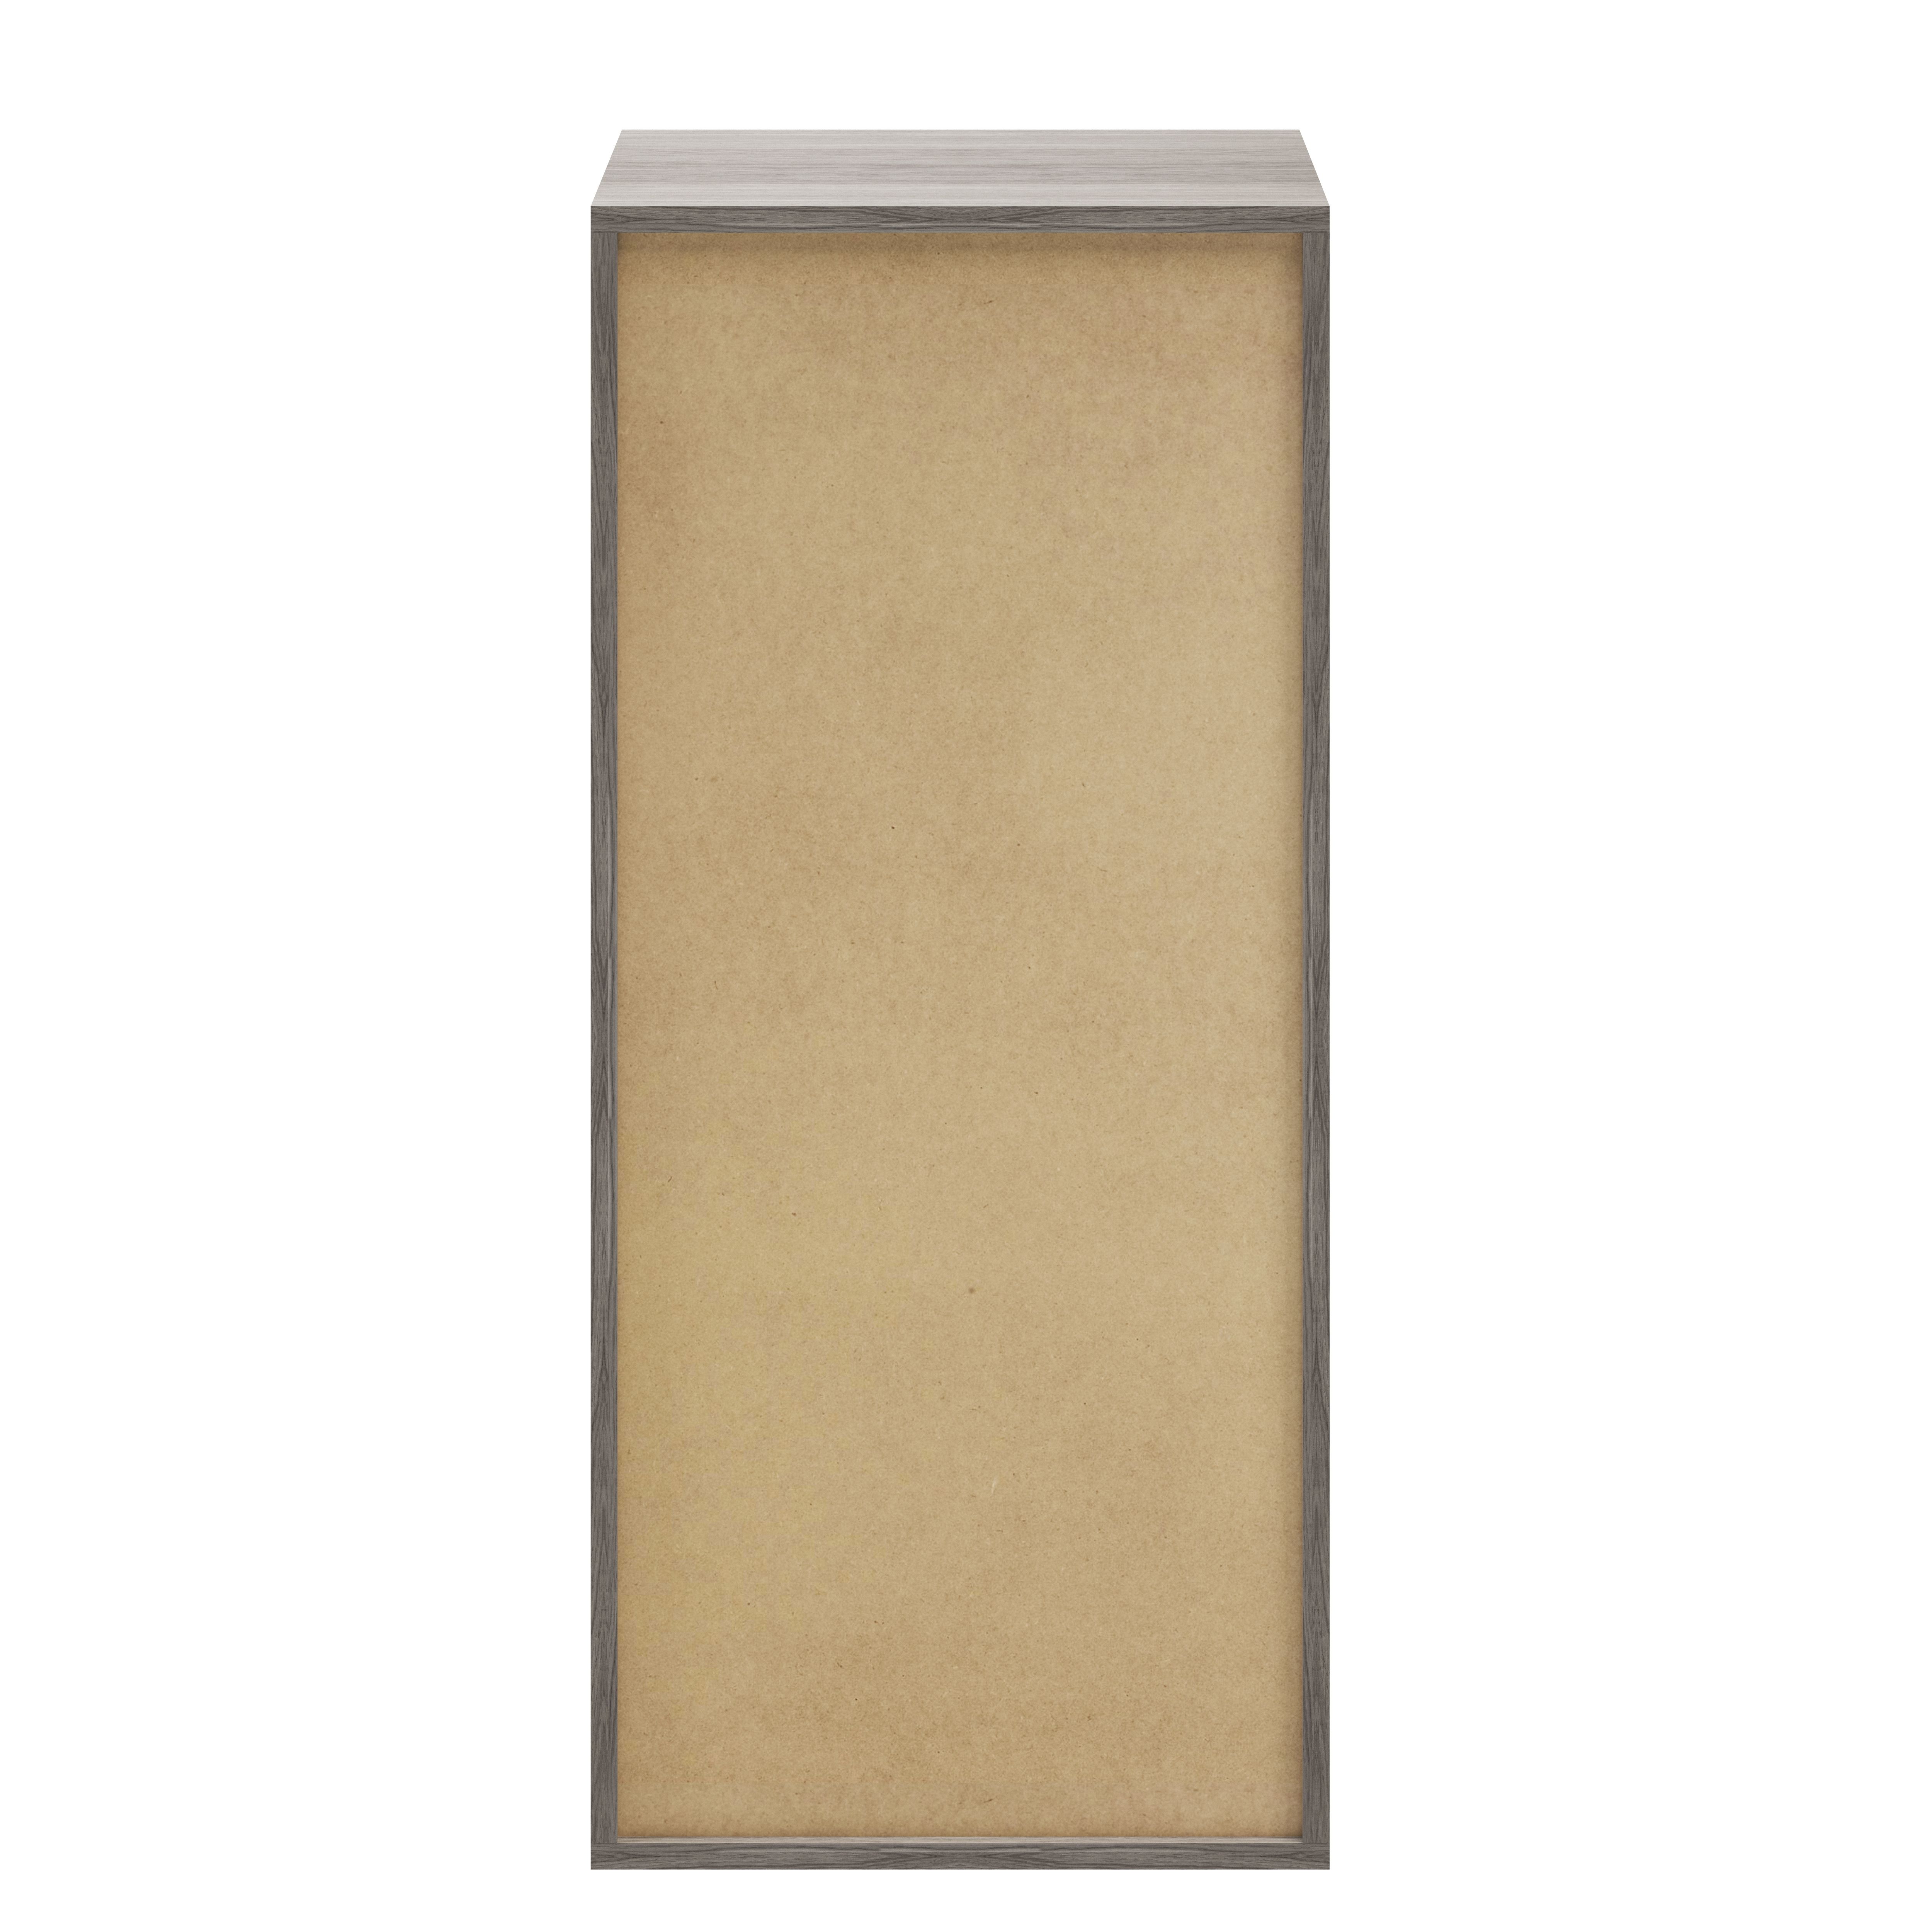 GoodHome Atomia Matt Grey oak effect Modular furniture cabinet, (H)1125mm (W)500mm (D)350mm